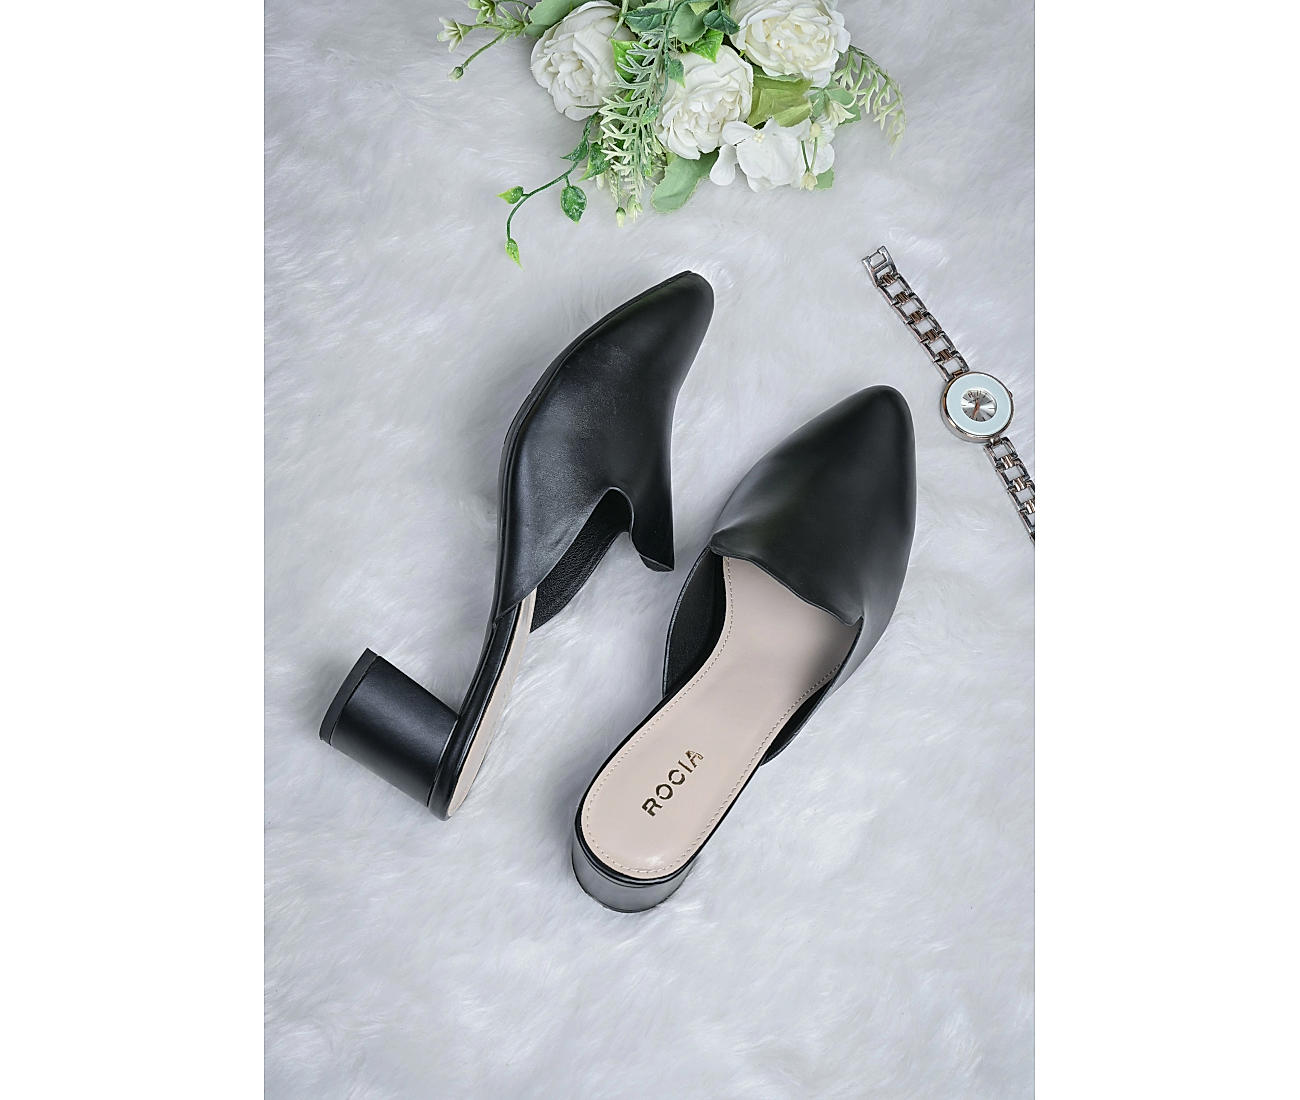 Black Vicky Giaro 16cm platform heel profile pumps - Giaro High Heels |  Official store - All Vegan High Heels